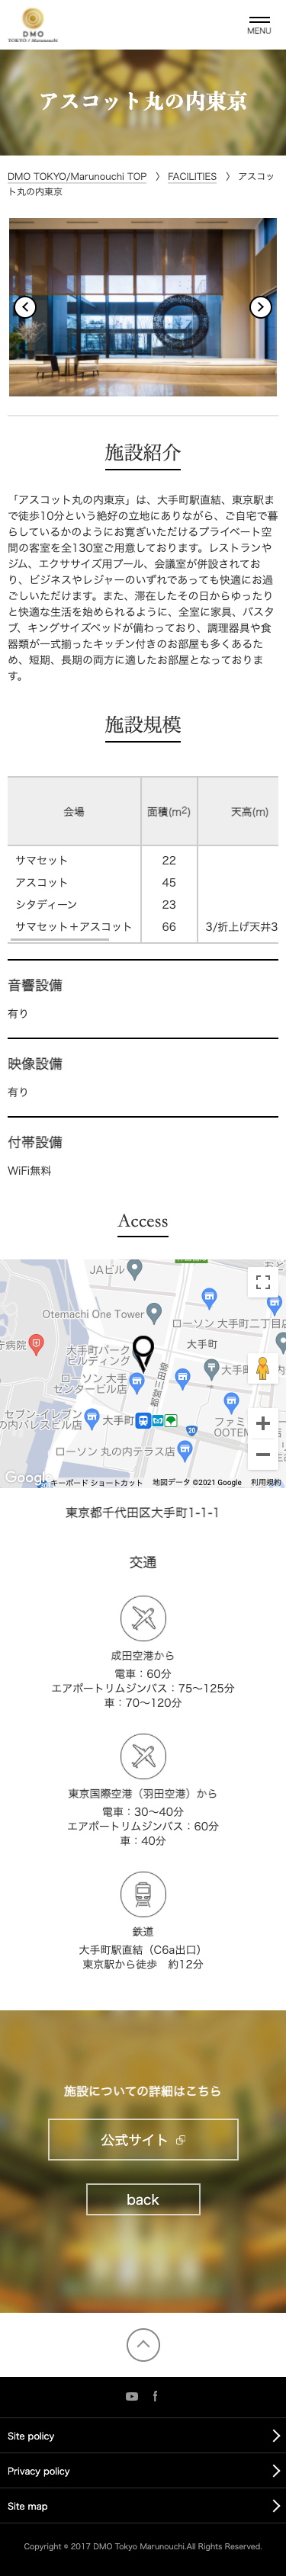 DMO東京丸の内 MICE業界向けオフィシャルWEBサイト